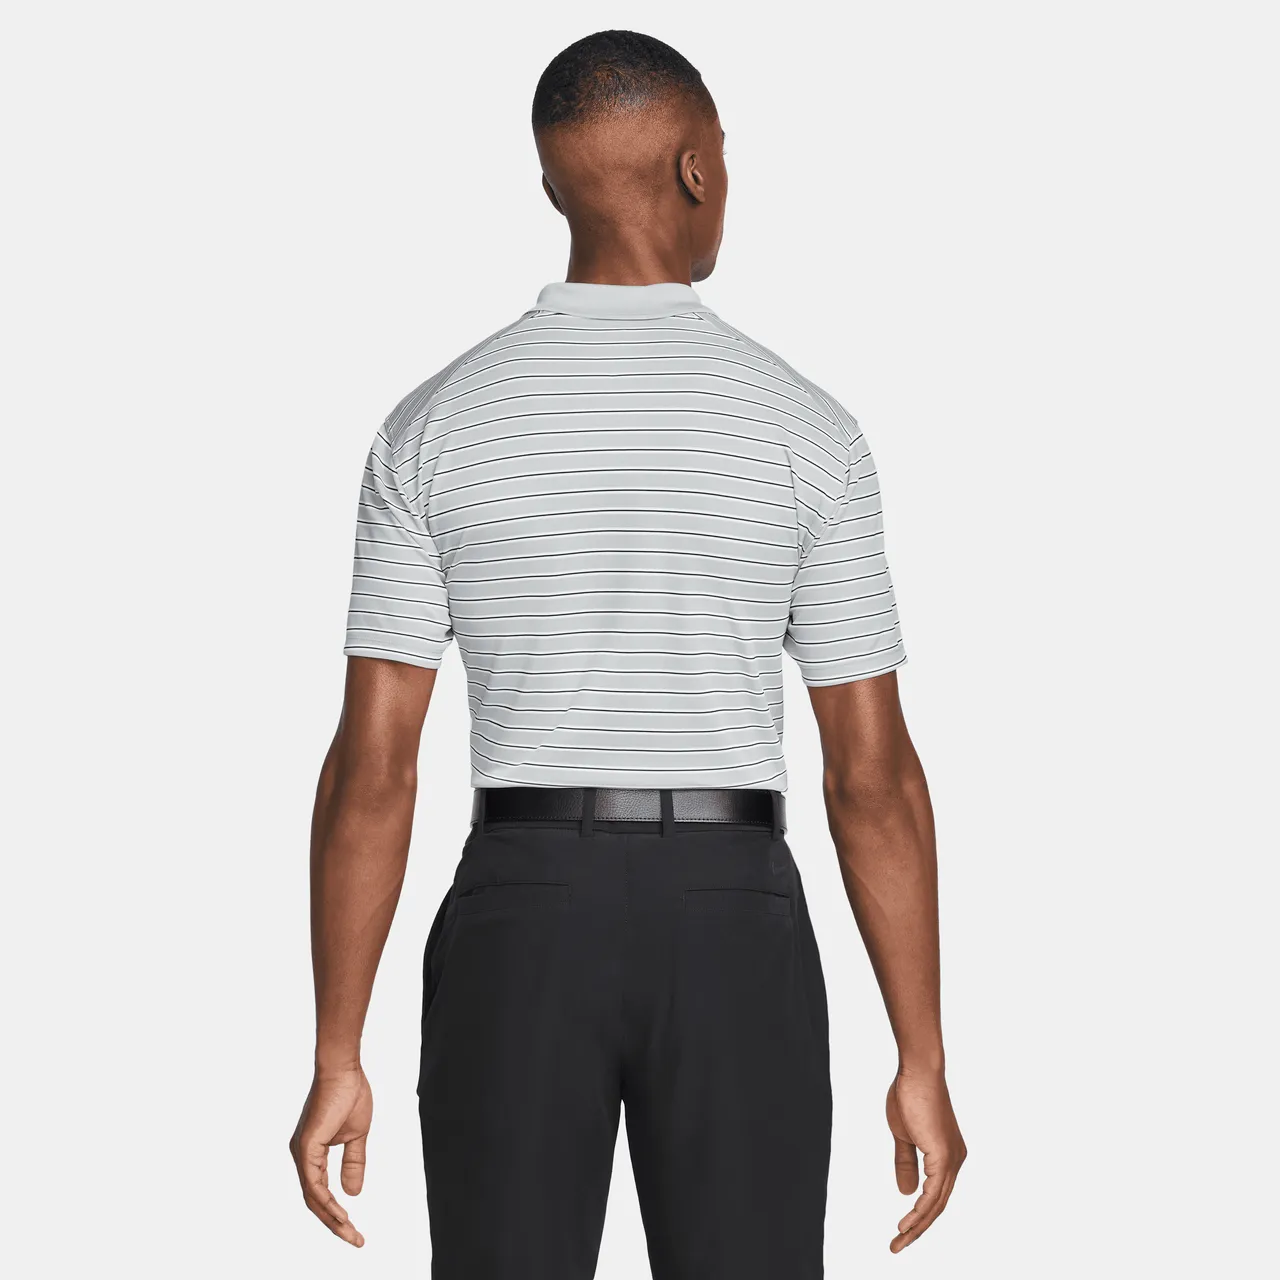 Nike Dri-FIT Victory Men's Striped Golf Polo - Grey - Polyester